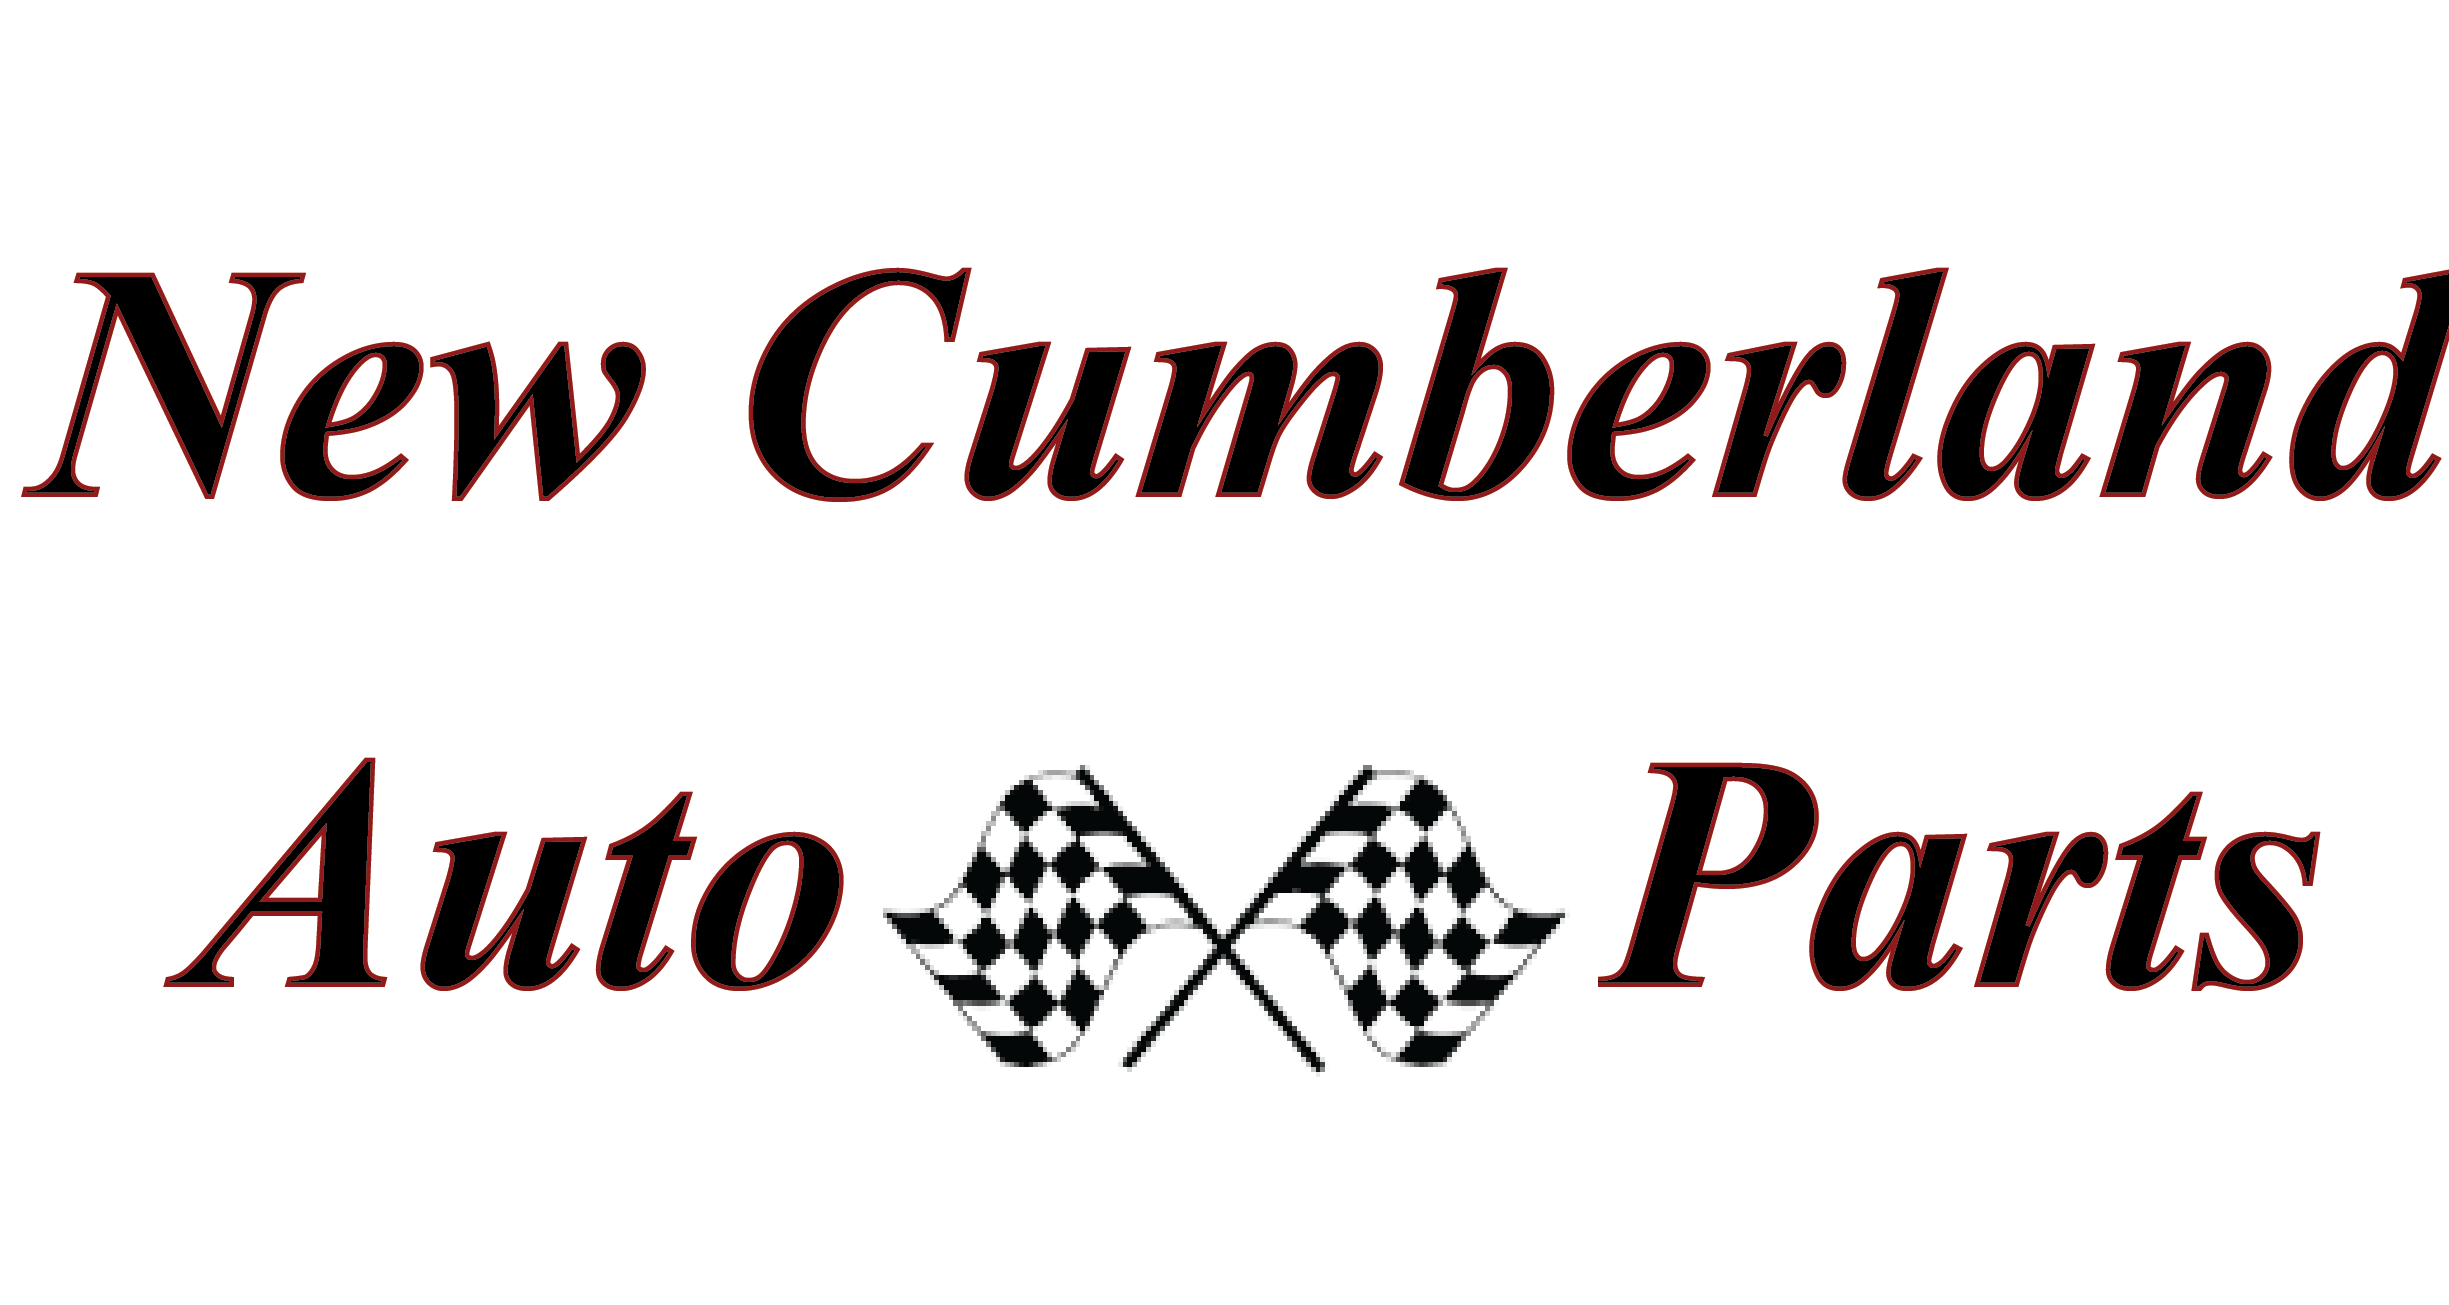 New Cumberland Auto Parts